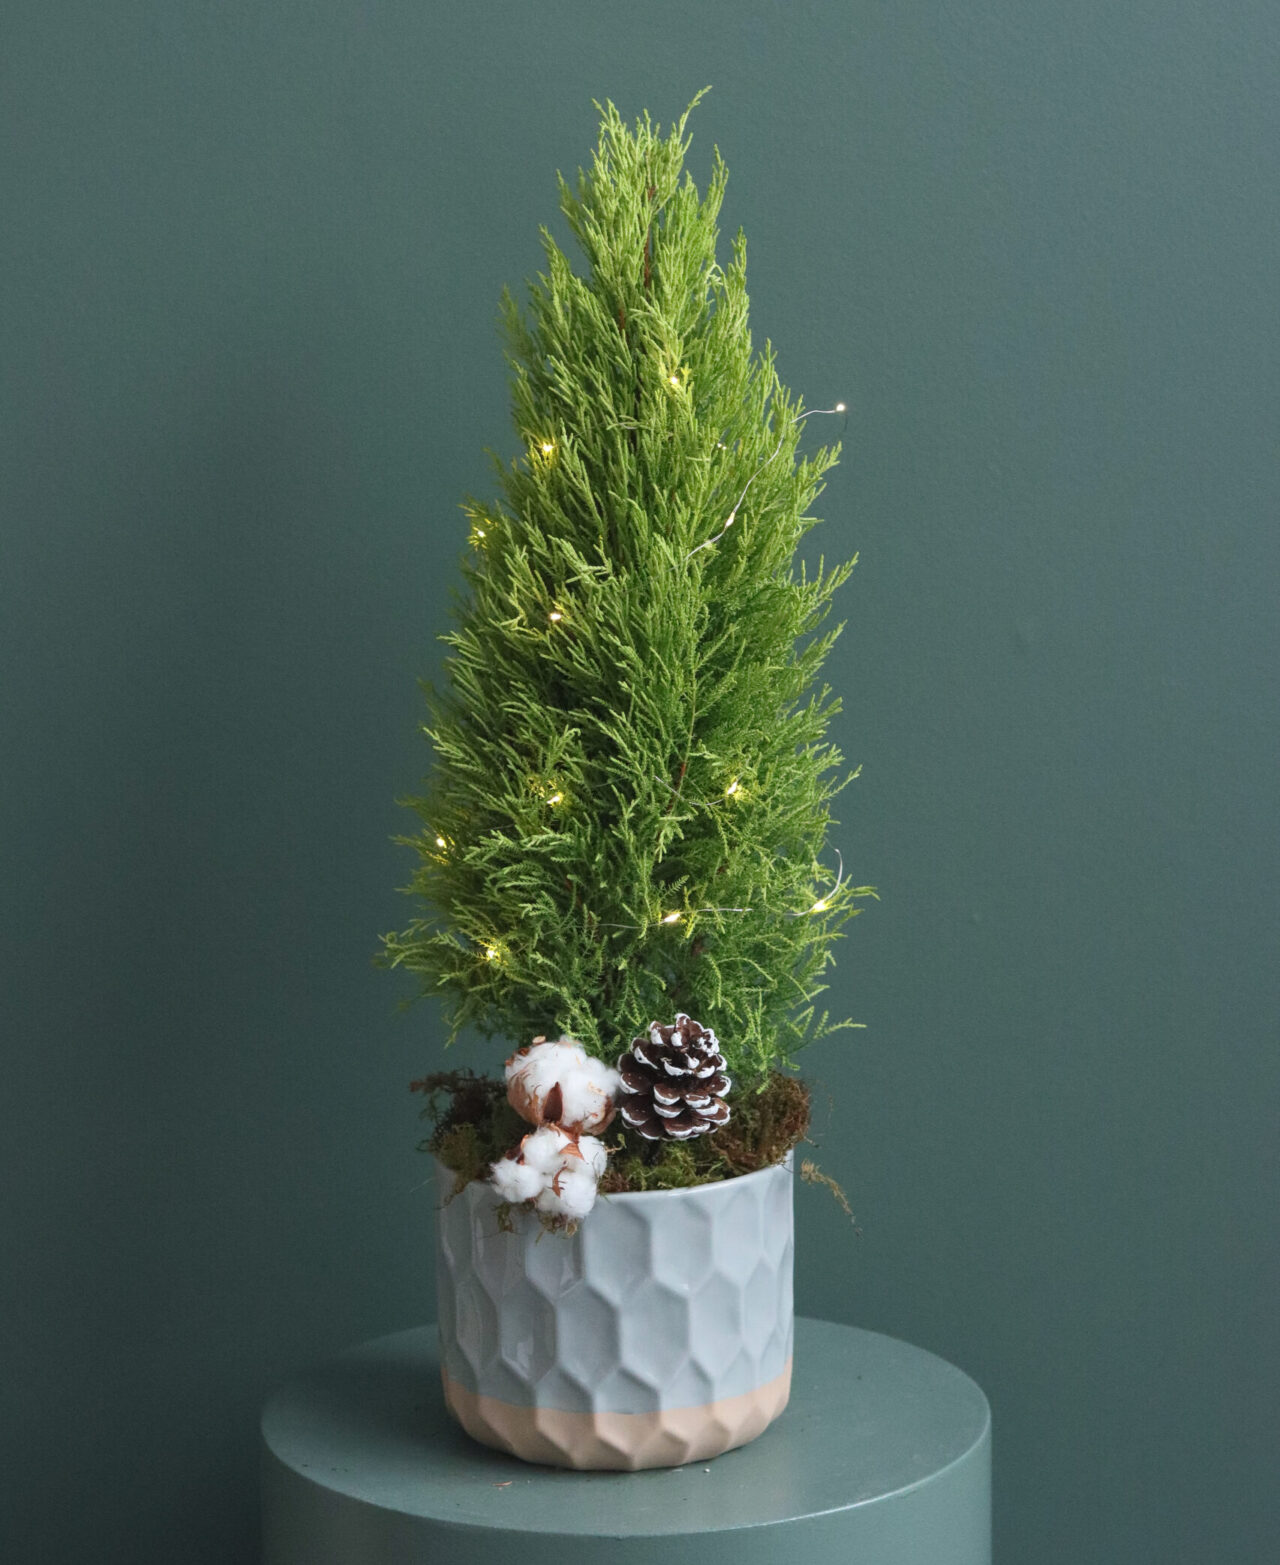 6” cypress tree dimpled grey pot lit